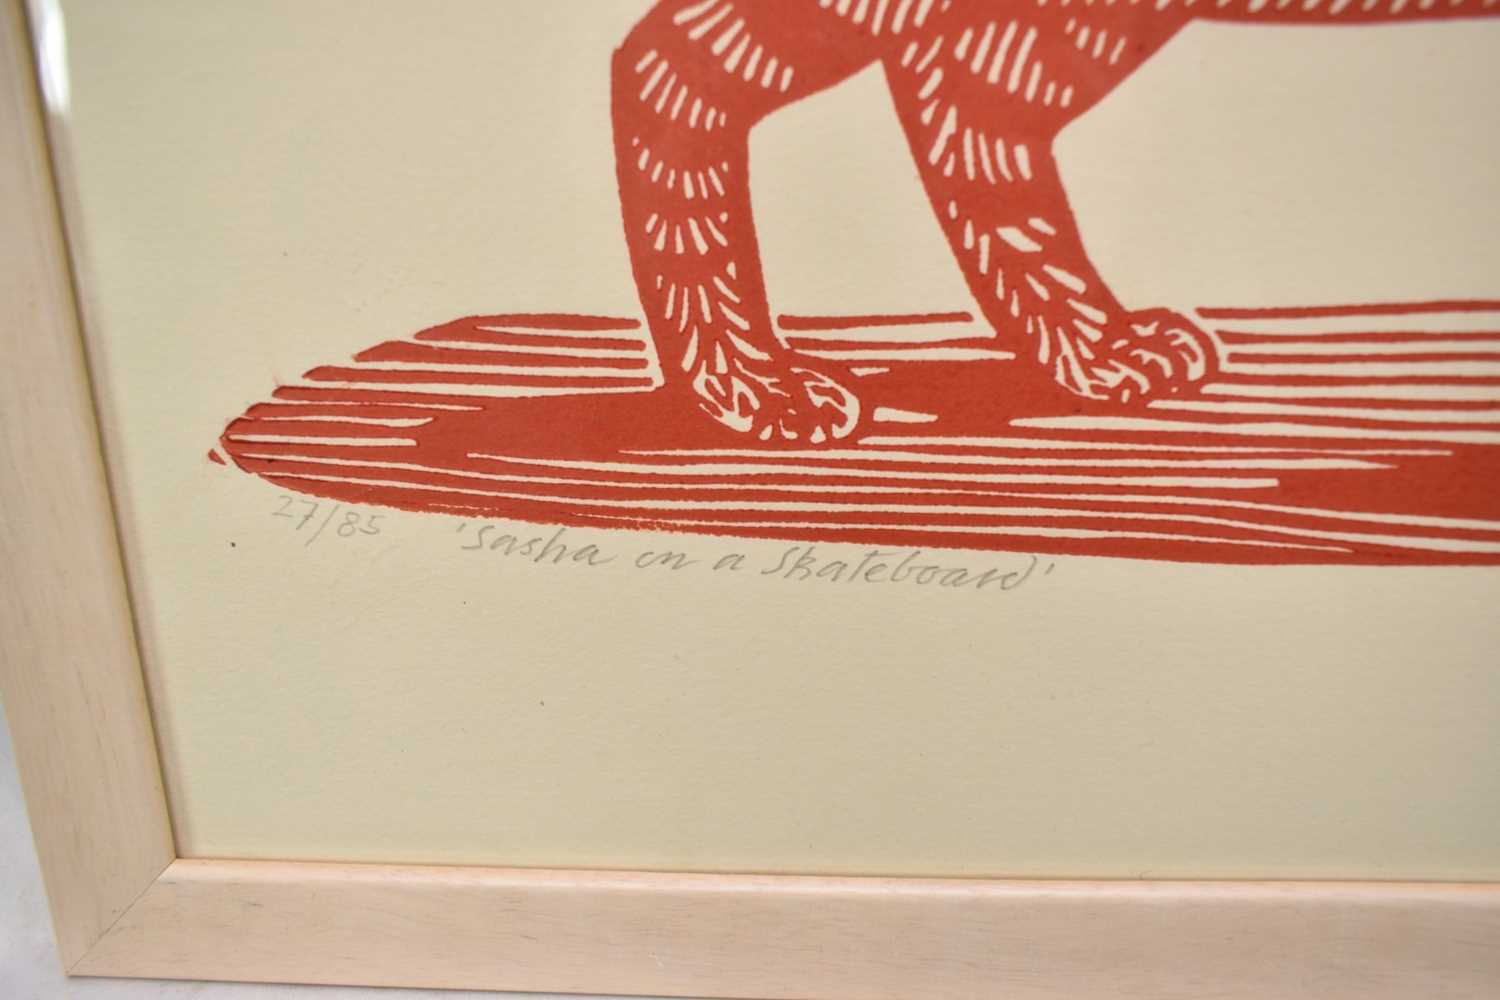 *Richard Bawden (b.1936), signed limited edition linocut - 'Sasha on a Skateboard' 27/85, 27cm x 34. - Image 3 of 4